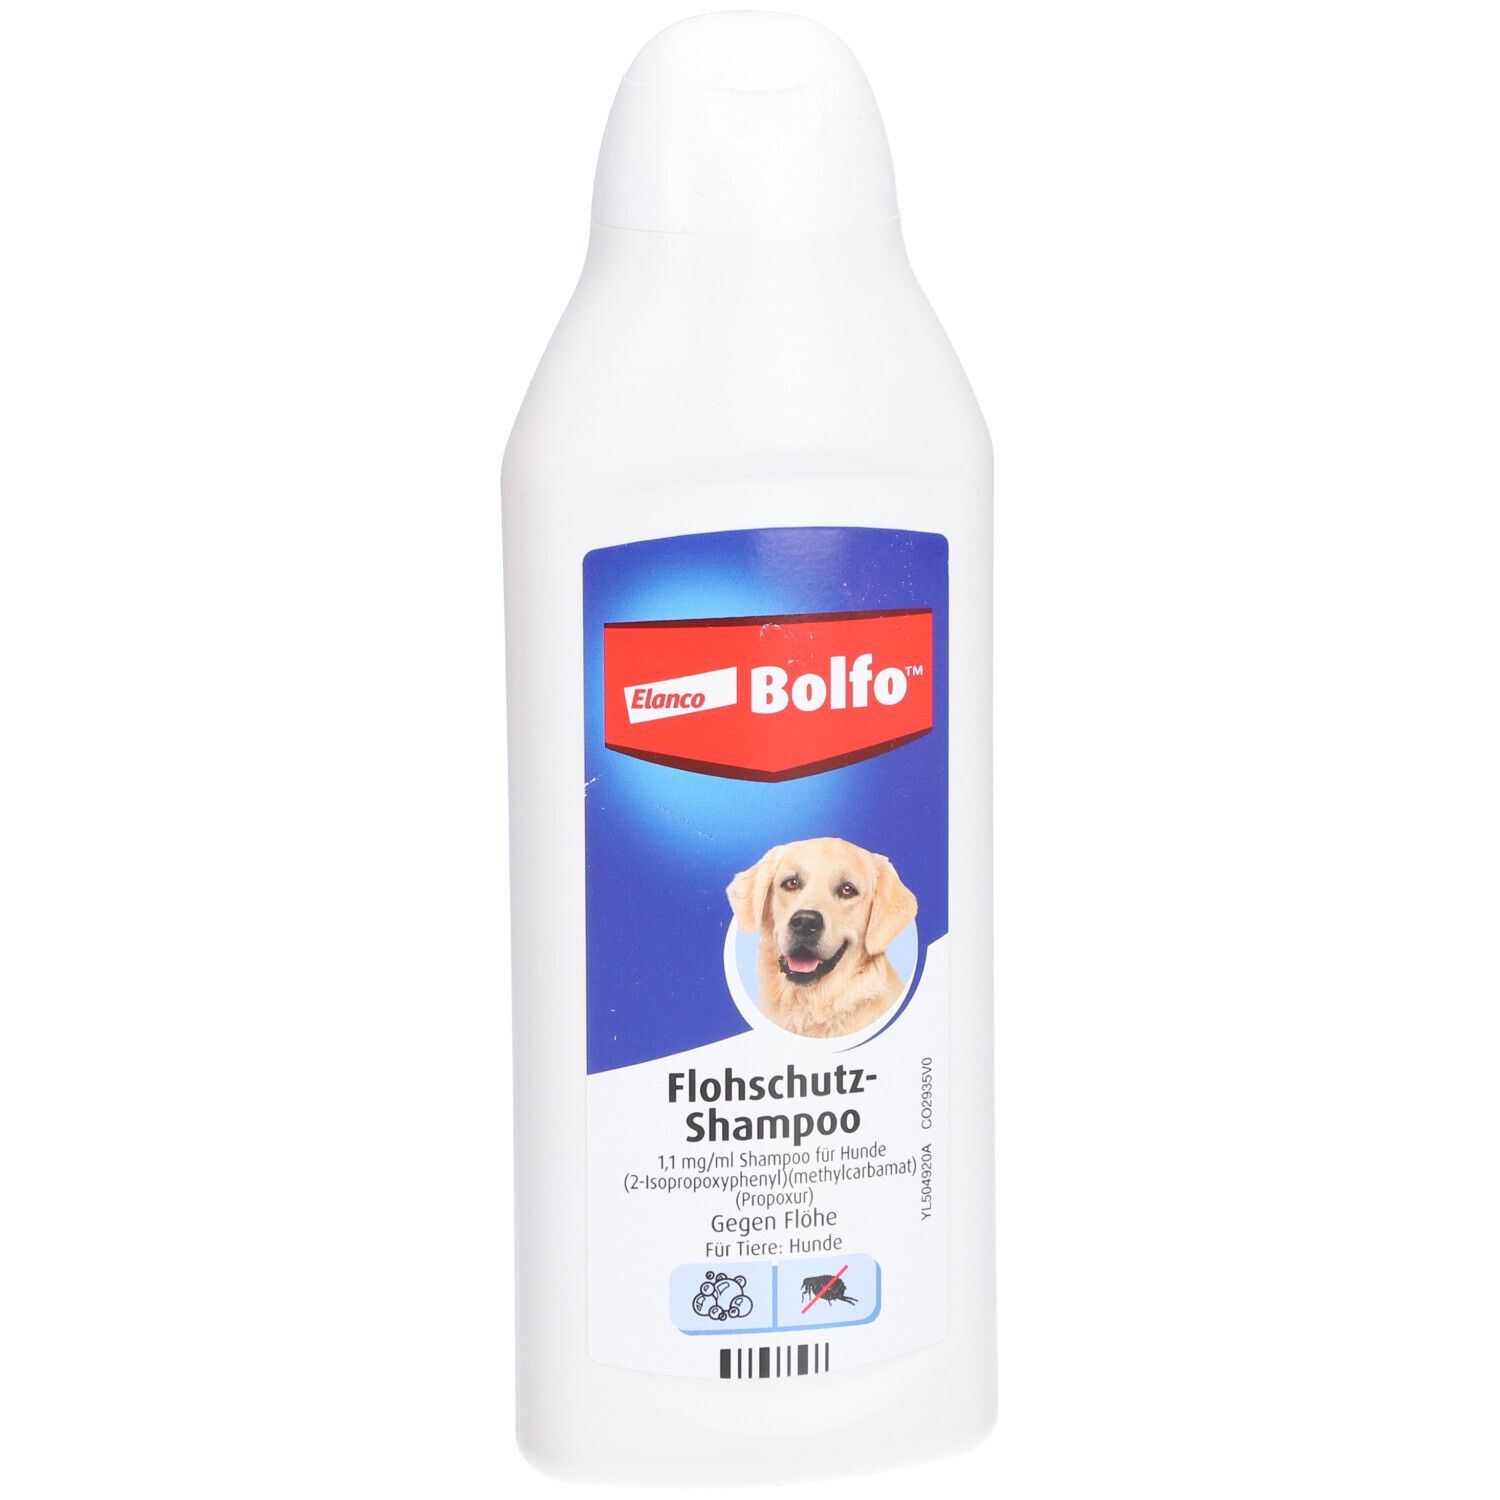 Bolfo® Flohschutz-Shampoo